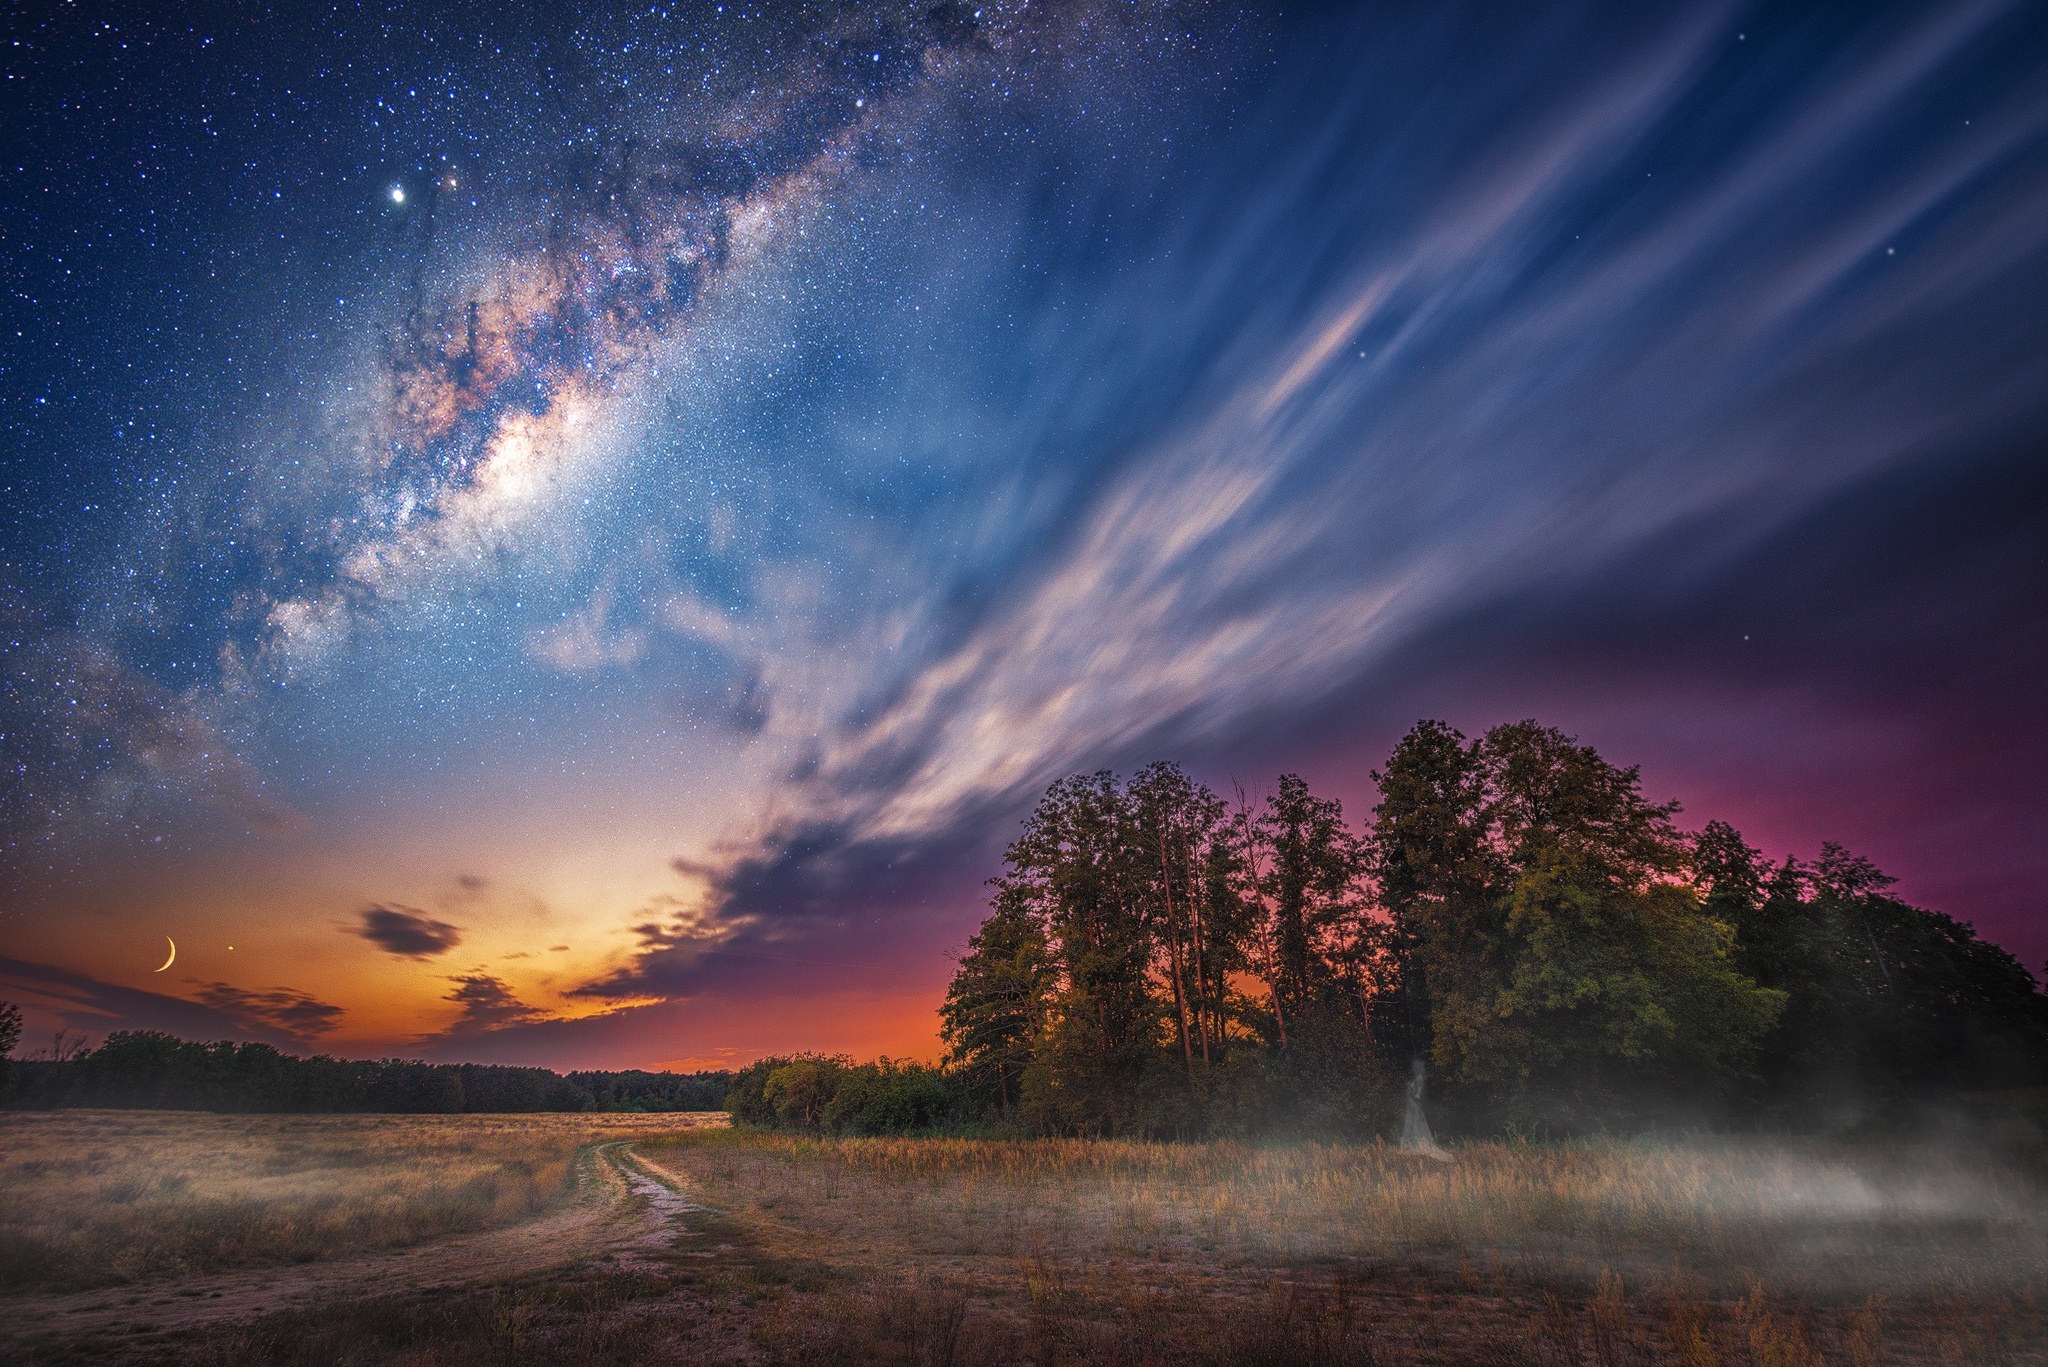 Milky Way Starry Sky Landscape Wallpapers